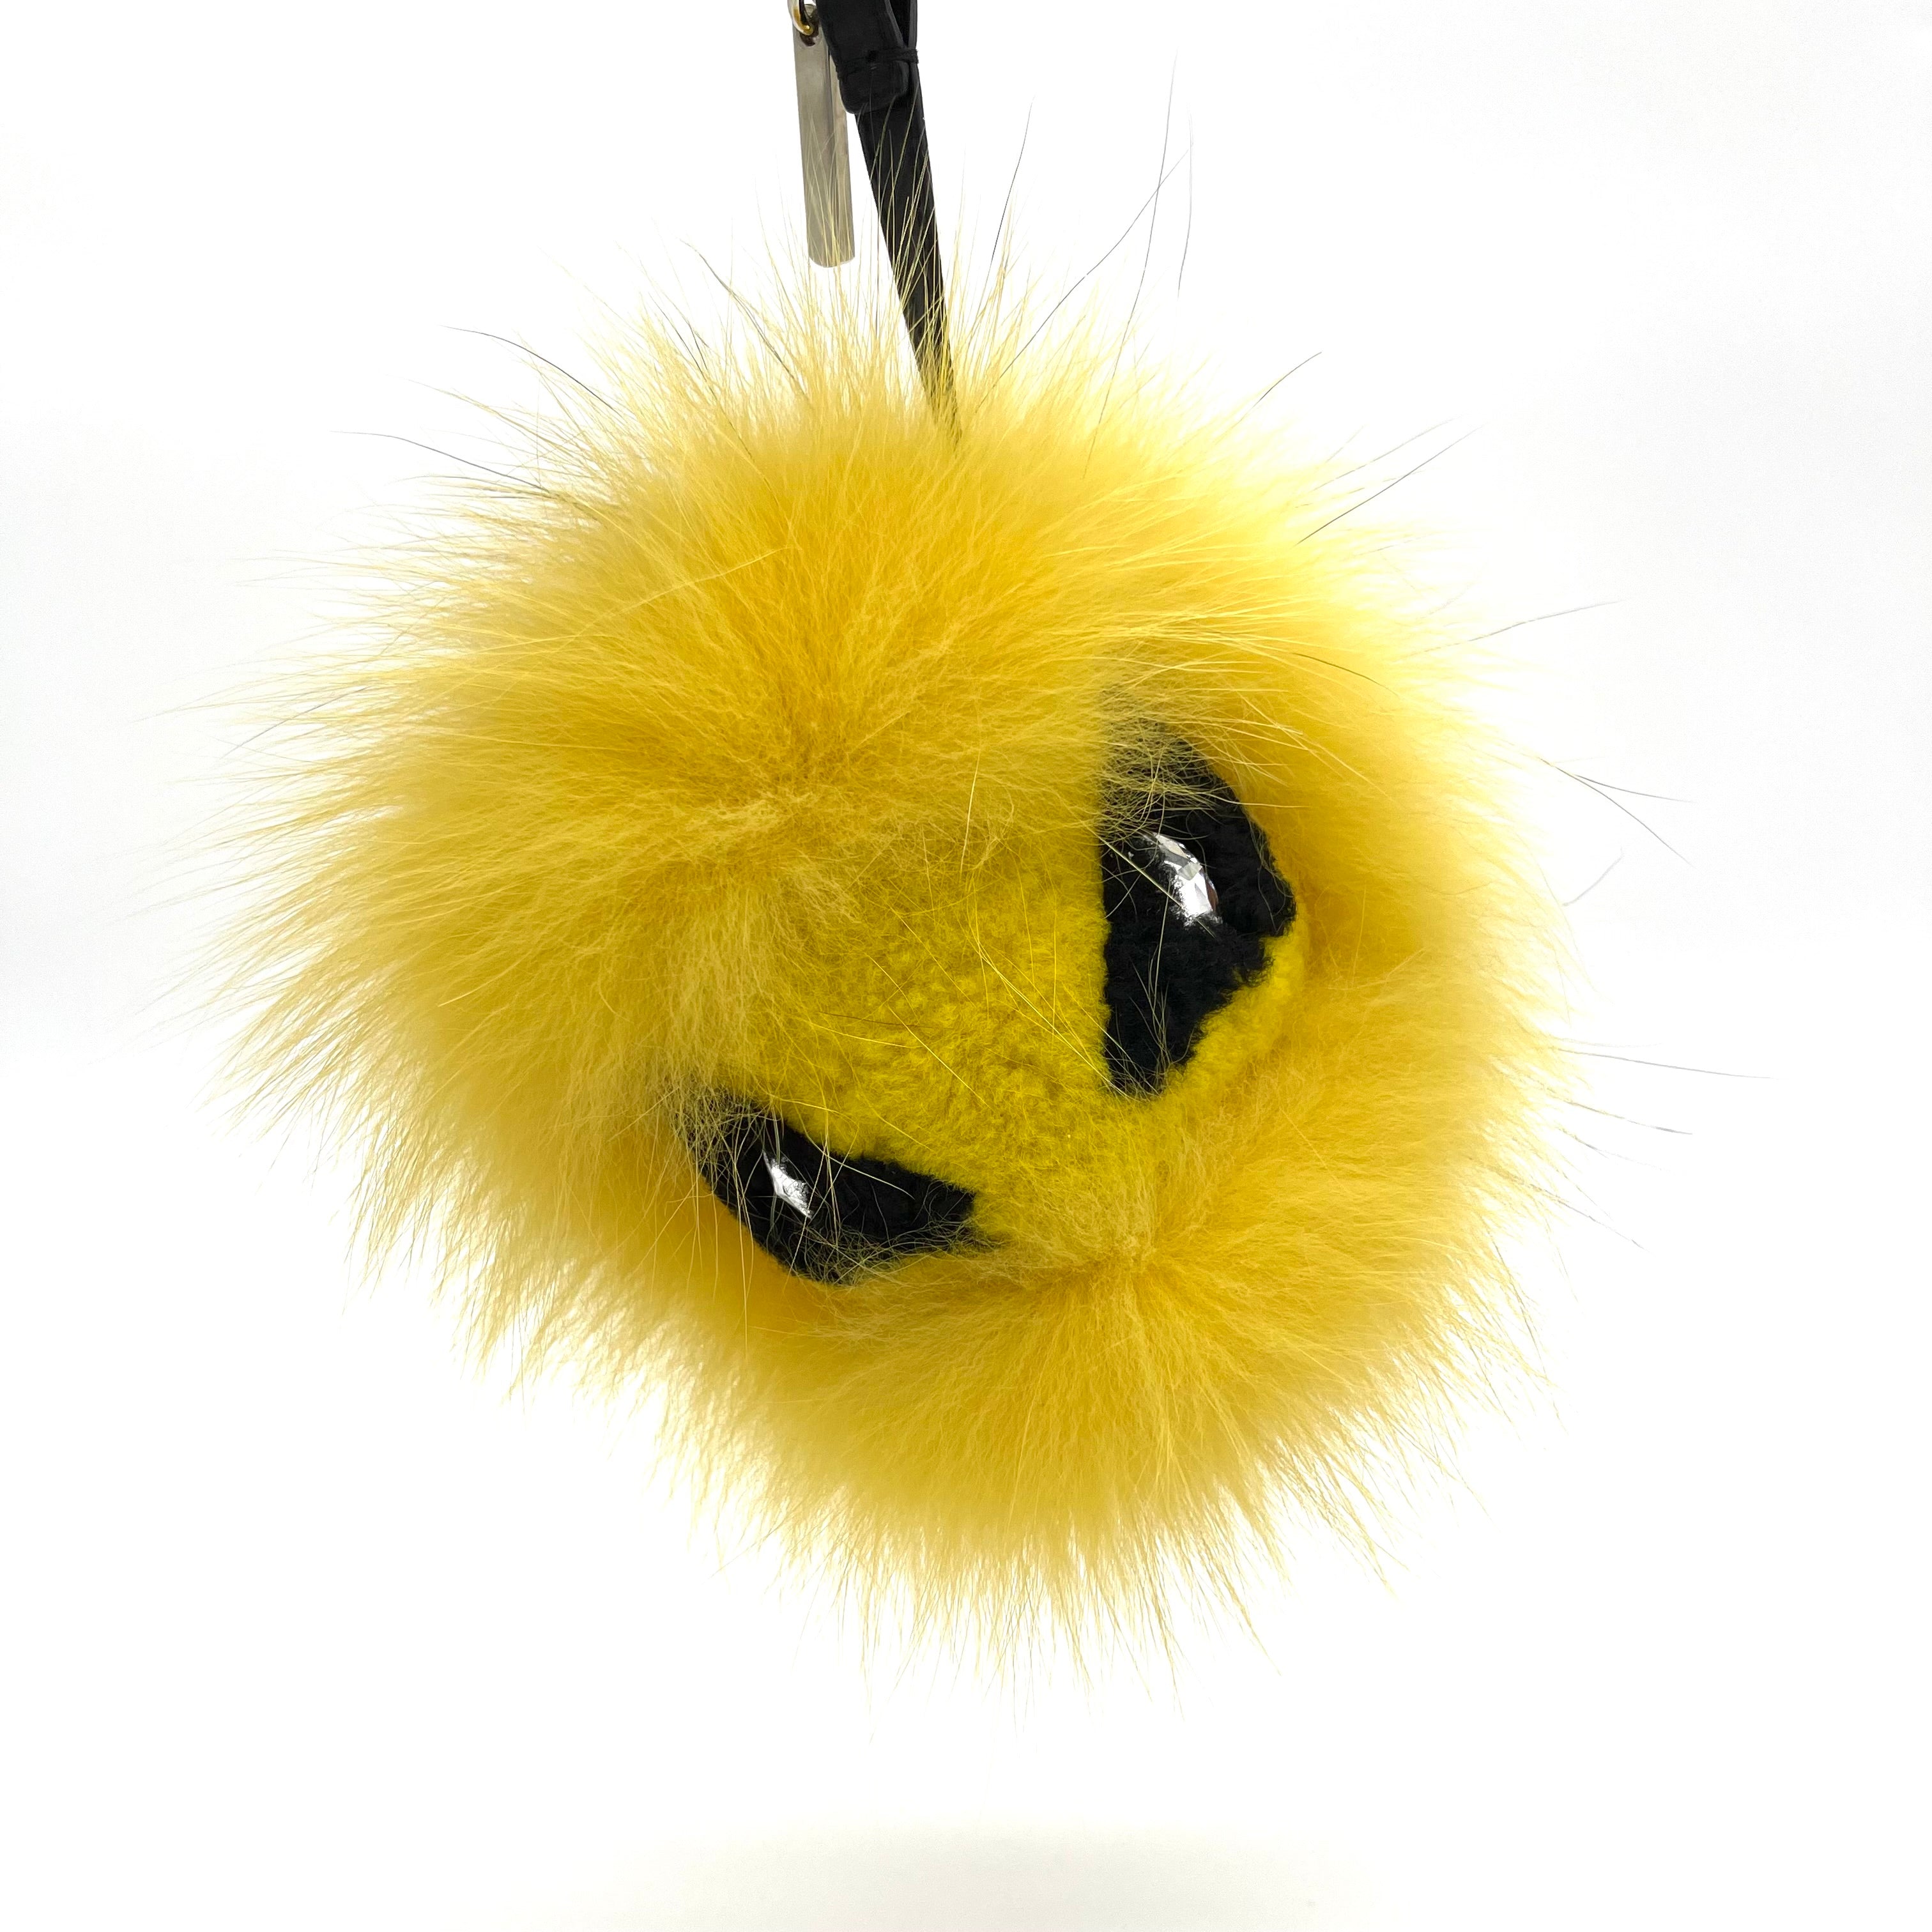 Fendi Tria Fox Fur and Shearling Charm in Yellow Monster Key Ring